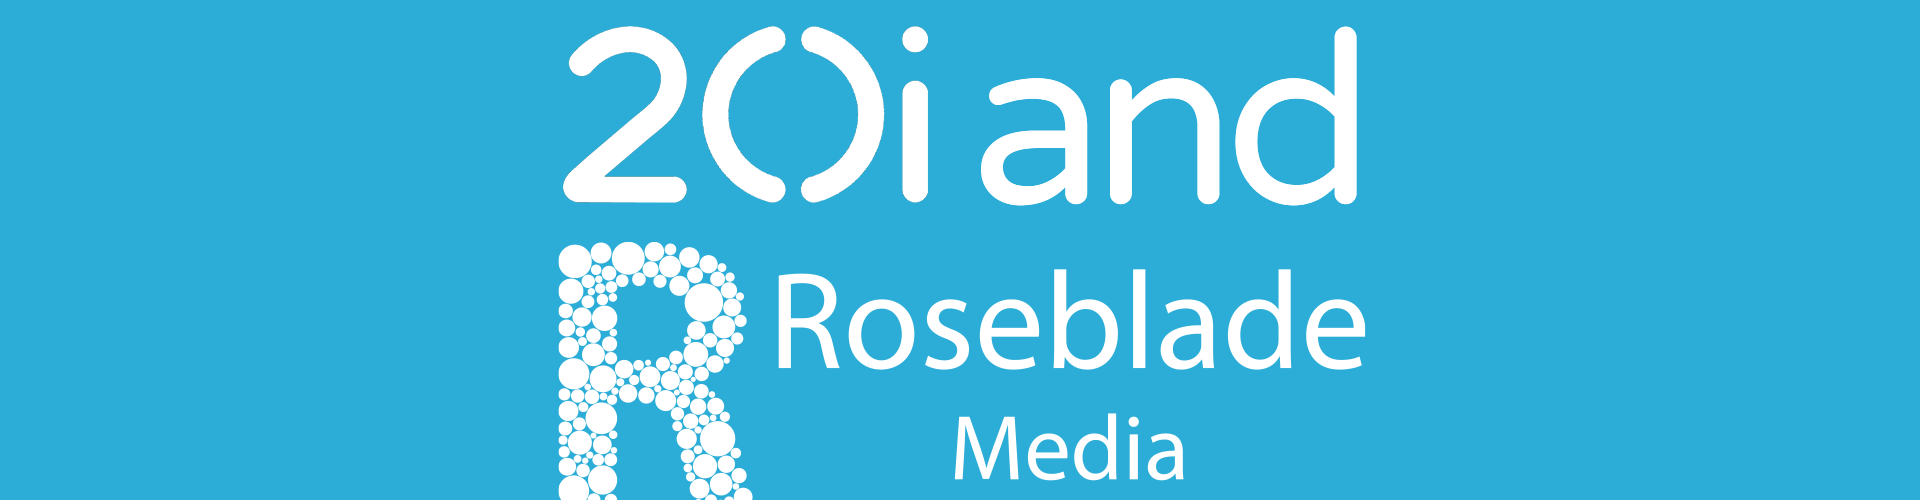 20i and Roseblade Media